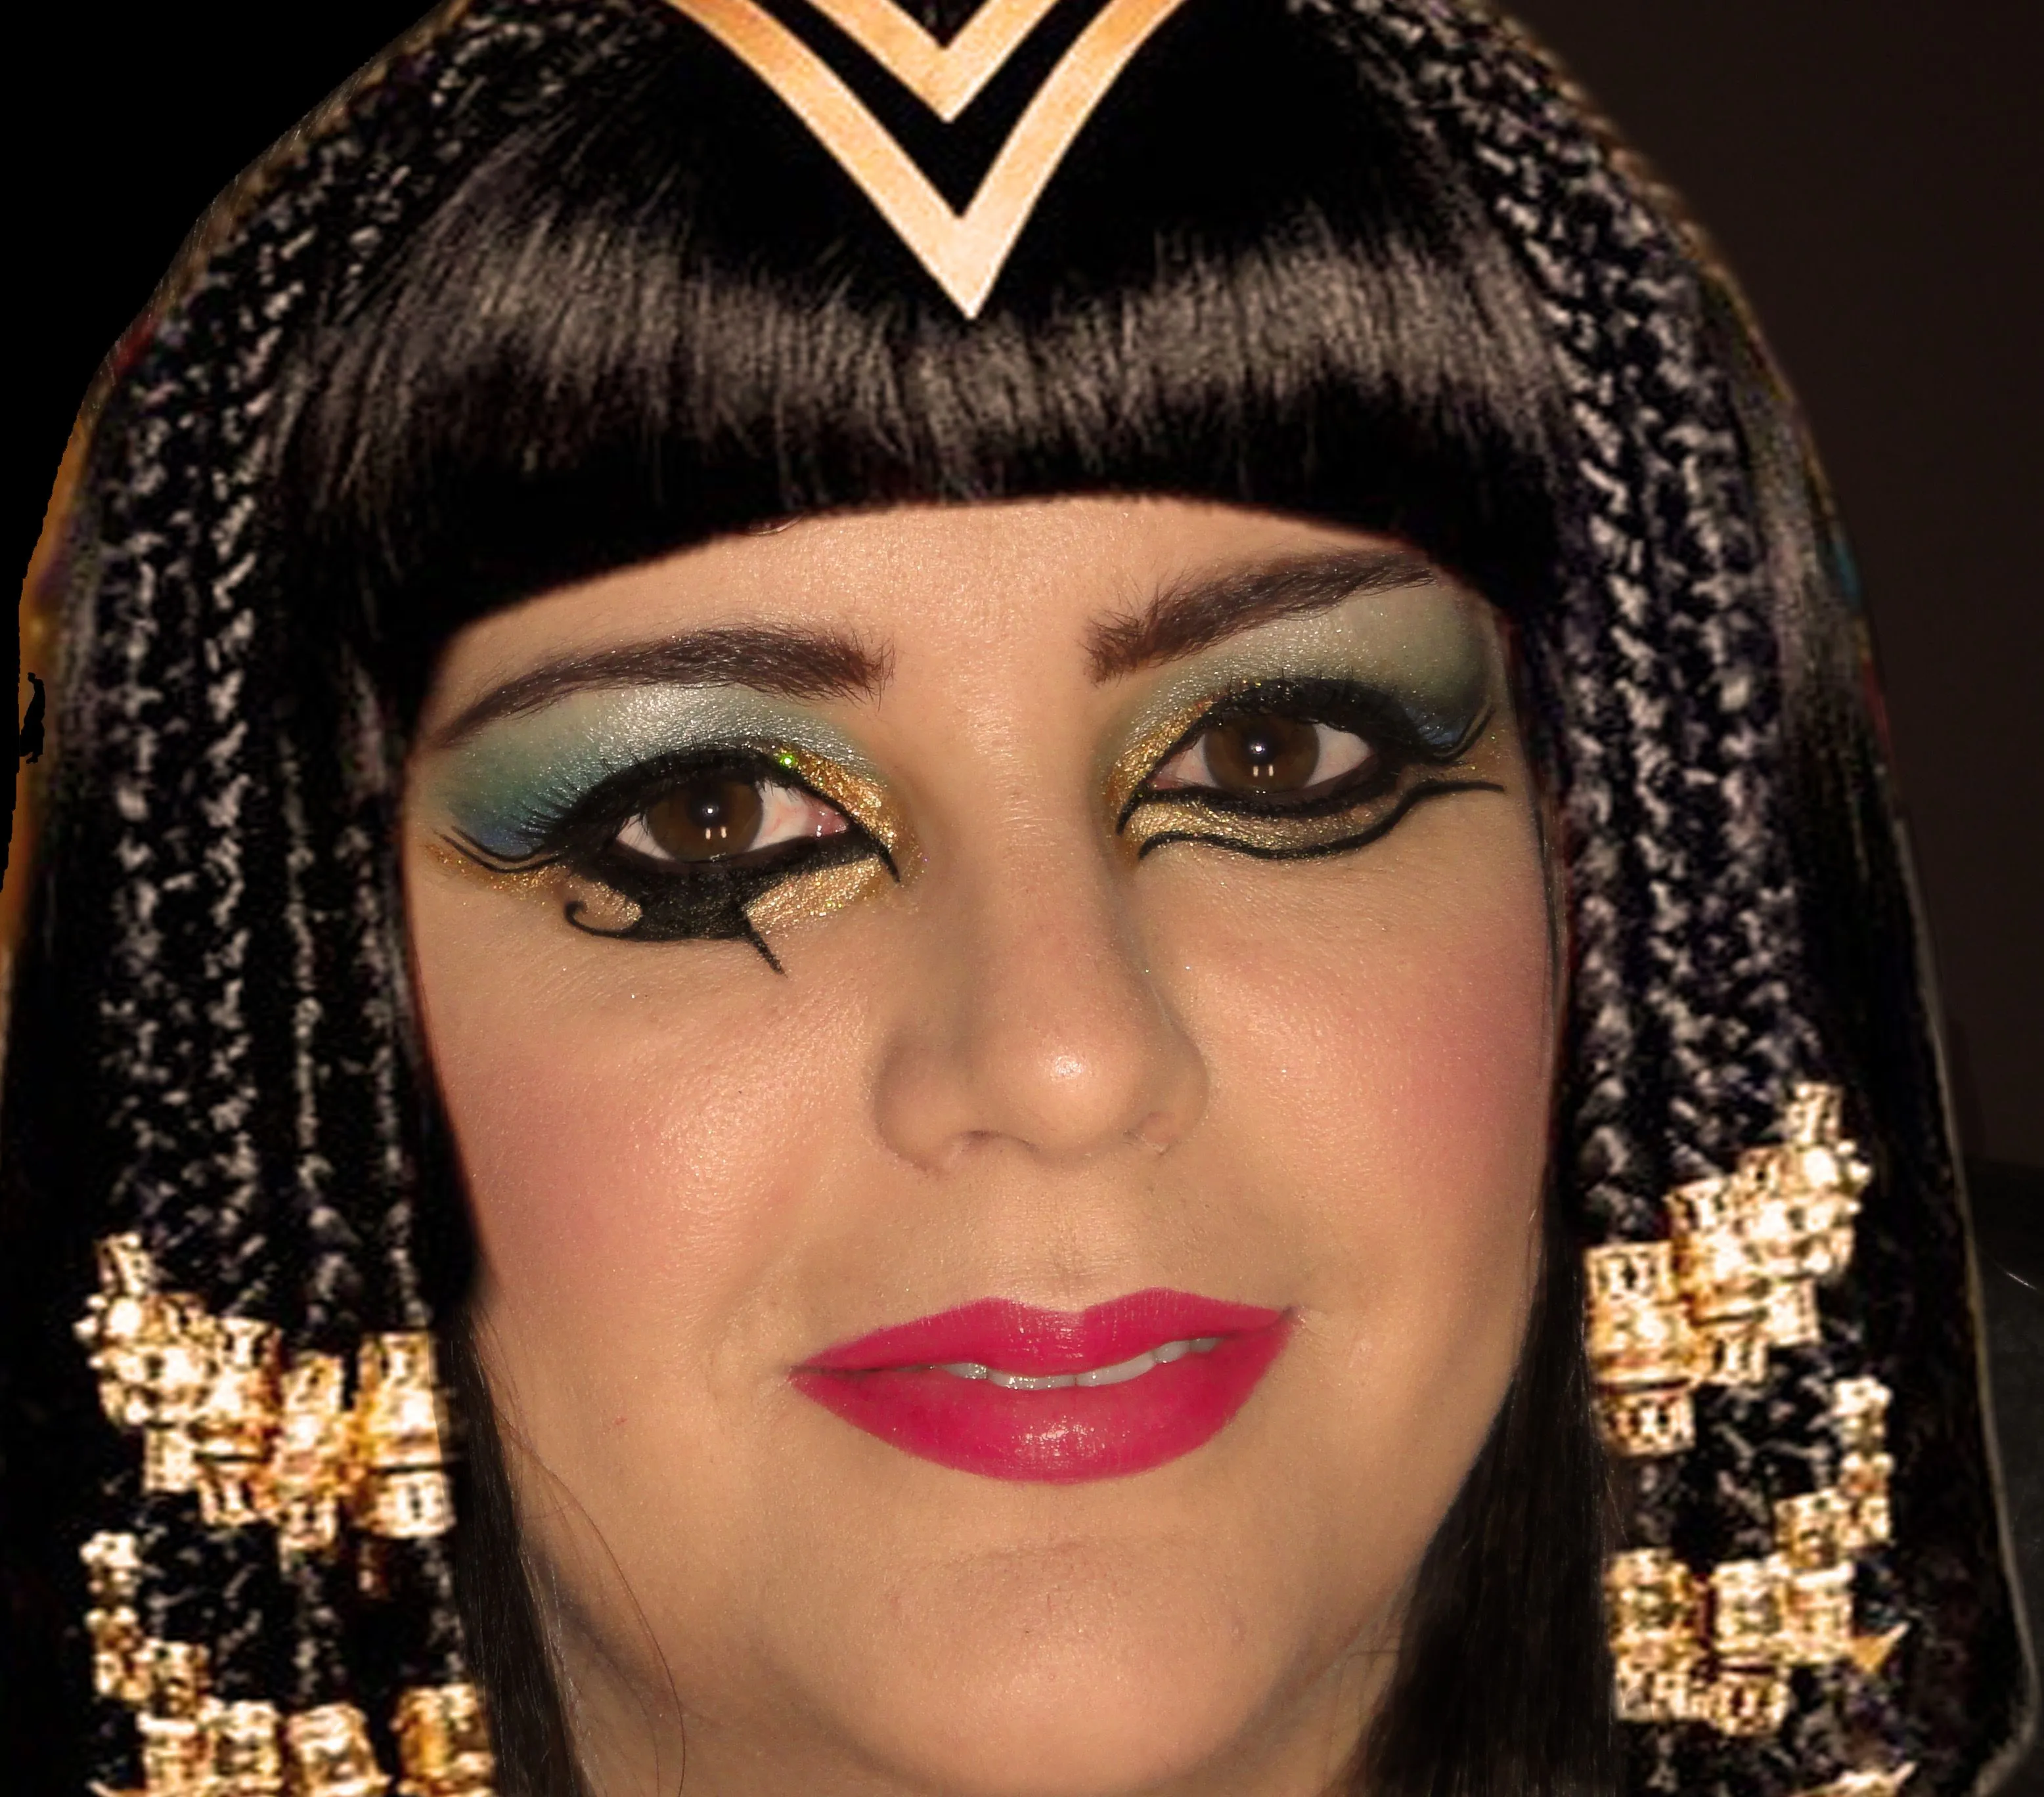 Cleopatra maquillaje - Imagui